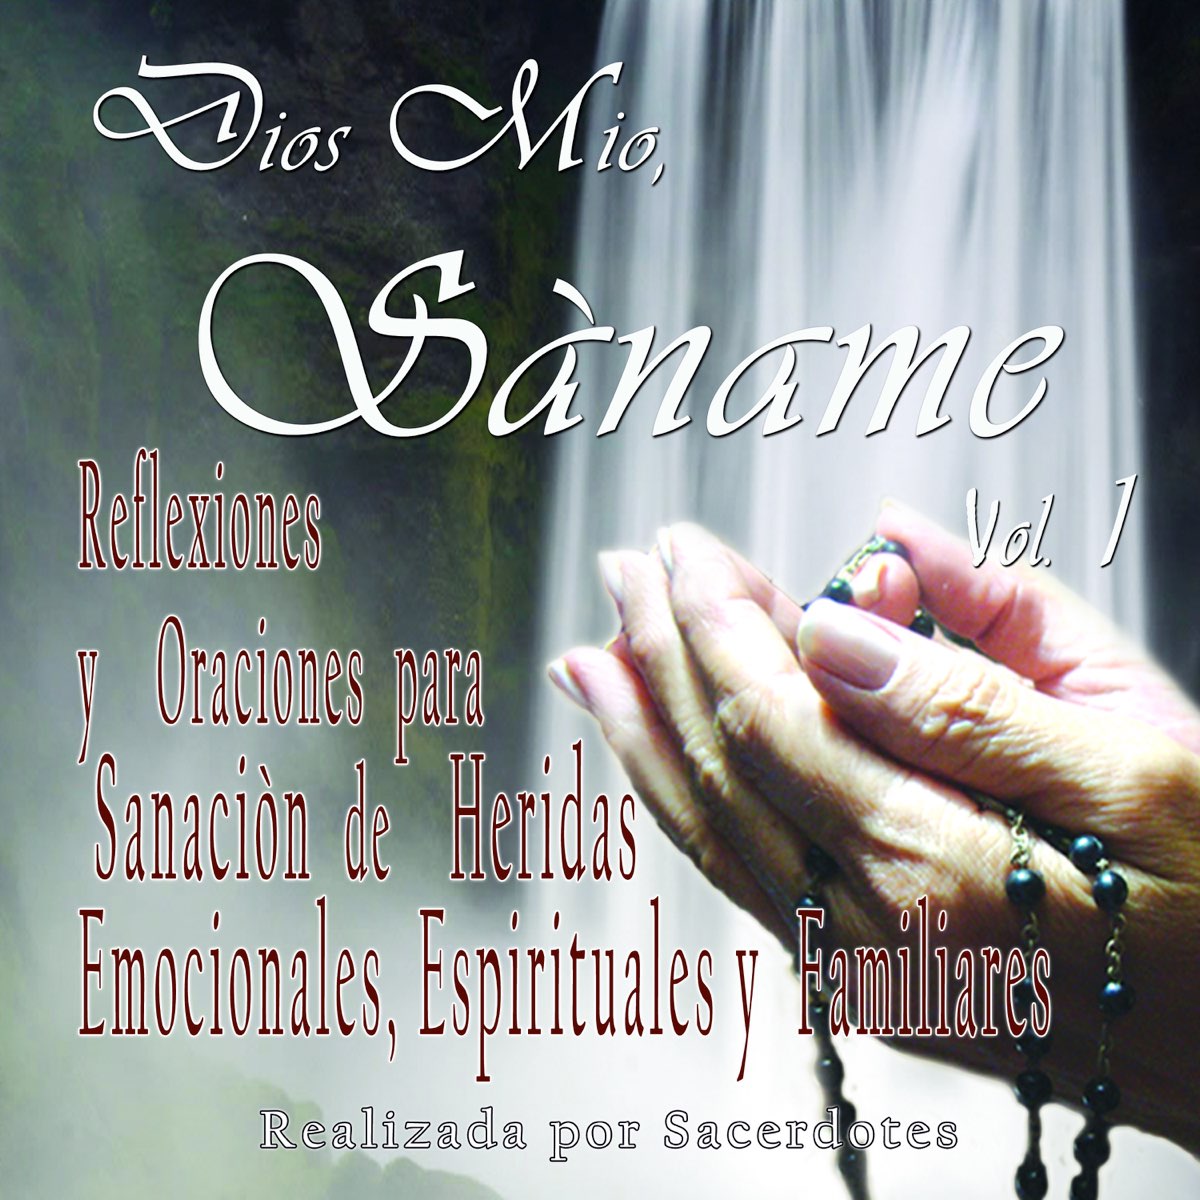 Dios mio sáname Vol. 01 by Paz y Bien on Apple Music